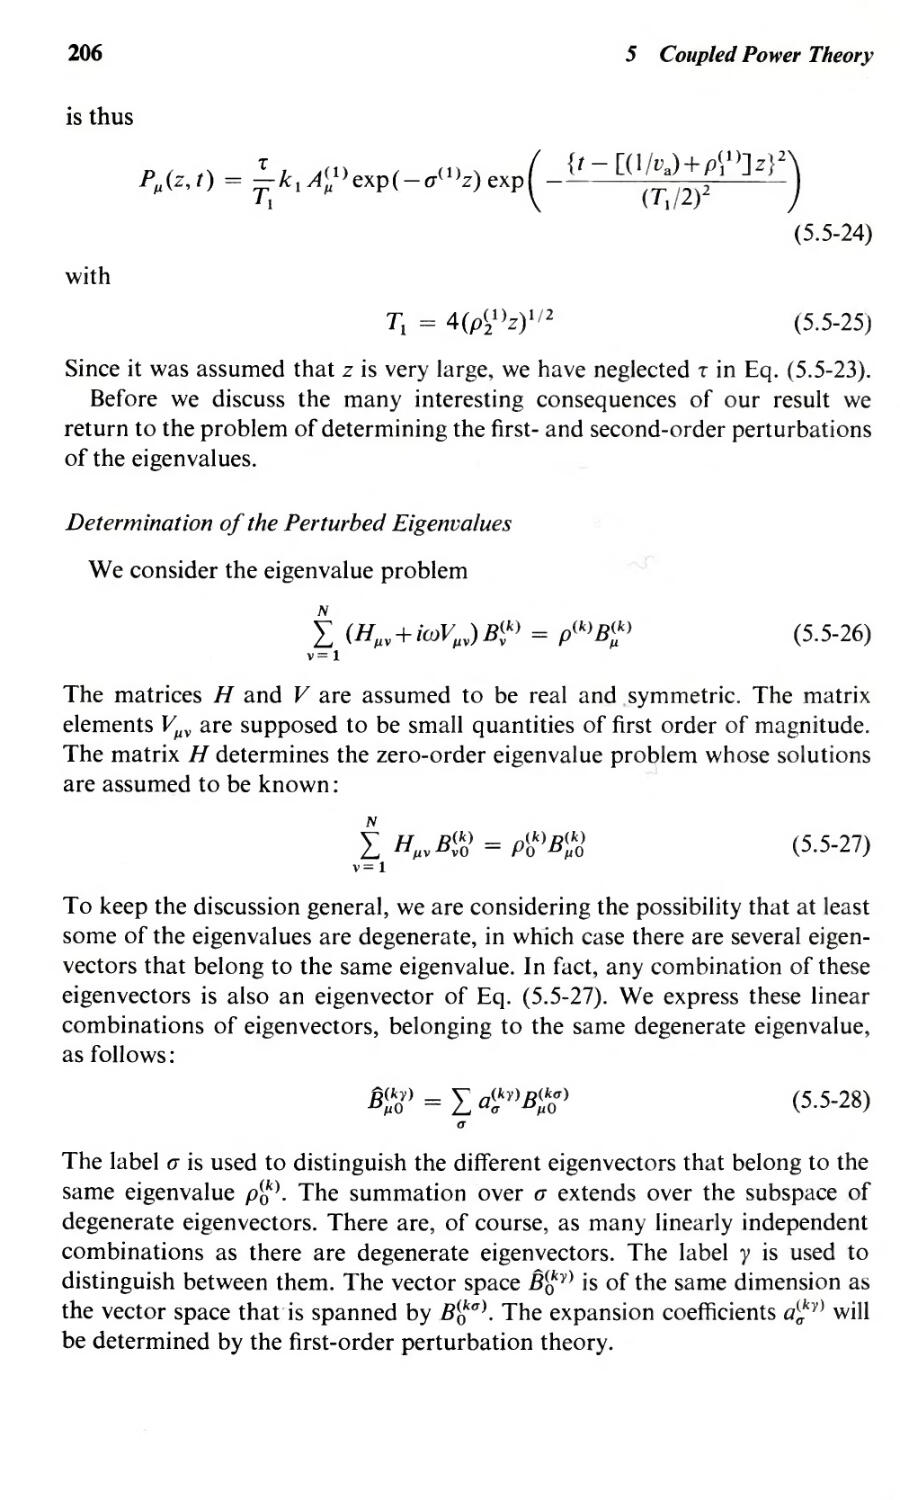 Degenerate eigenvalues, 206
--- degenerate, 206
Eigenvalue problem, 206
Equilibrium pulse, 206
First-order perturbation, 206-211
Perturbation theory, 206
--- first-order, 206-211
Perturbed eigenvalue, 206
Pulse width, 206